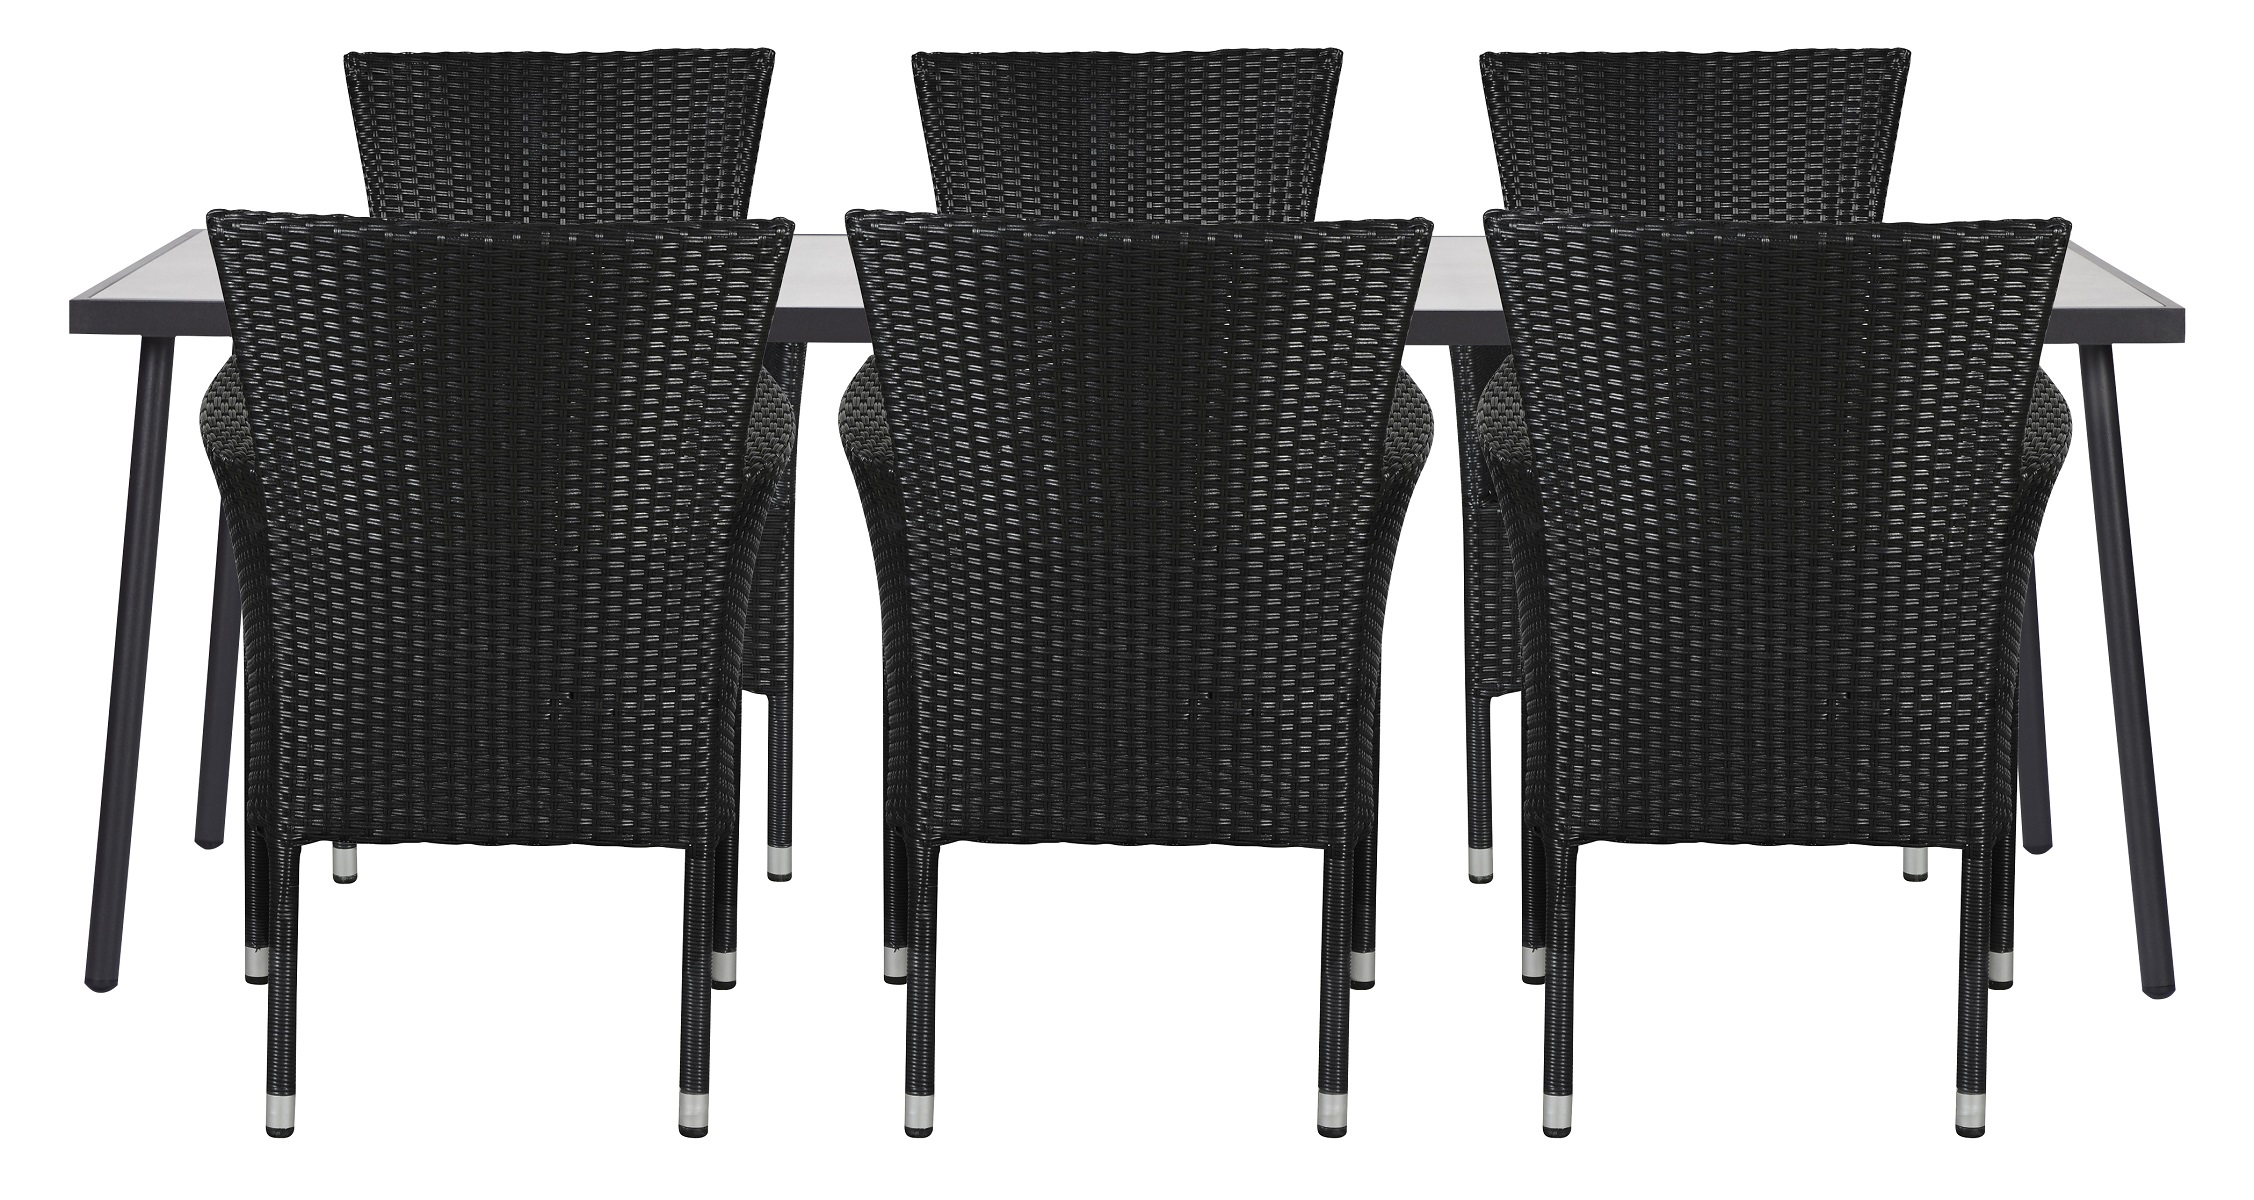 Living Outdoor - Avernakoe Garden Table 220 x 90 cm -  Metal/Alu/Glass - Black/Light Grey with 6 pcs. Anholt Garden Chairs​ - Black - Metal/Rattan - Bundle